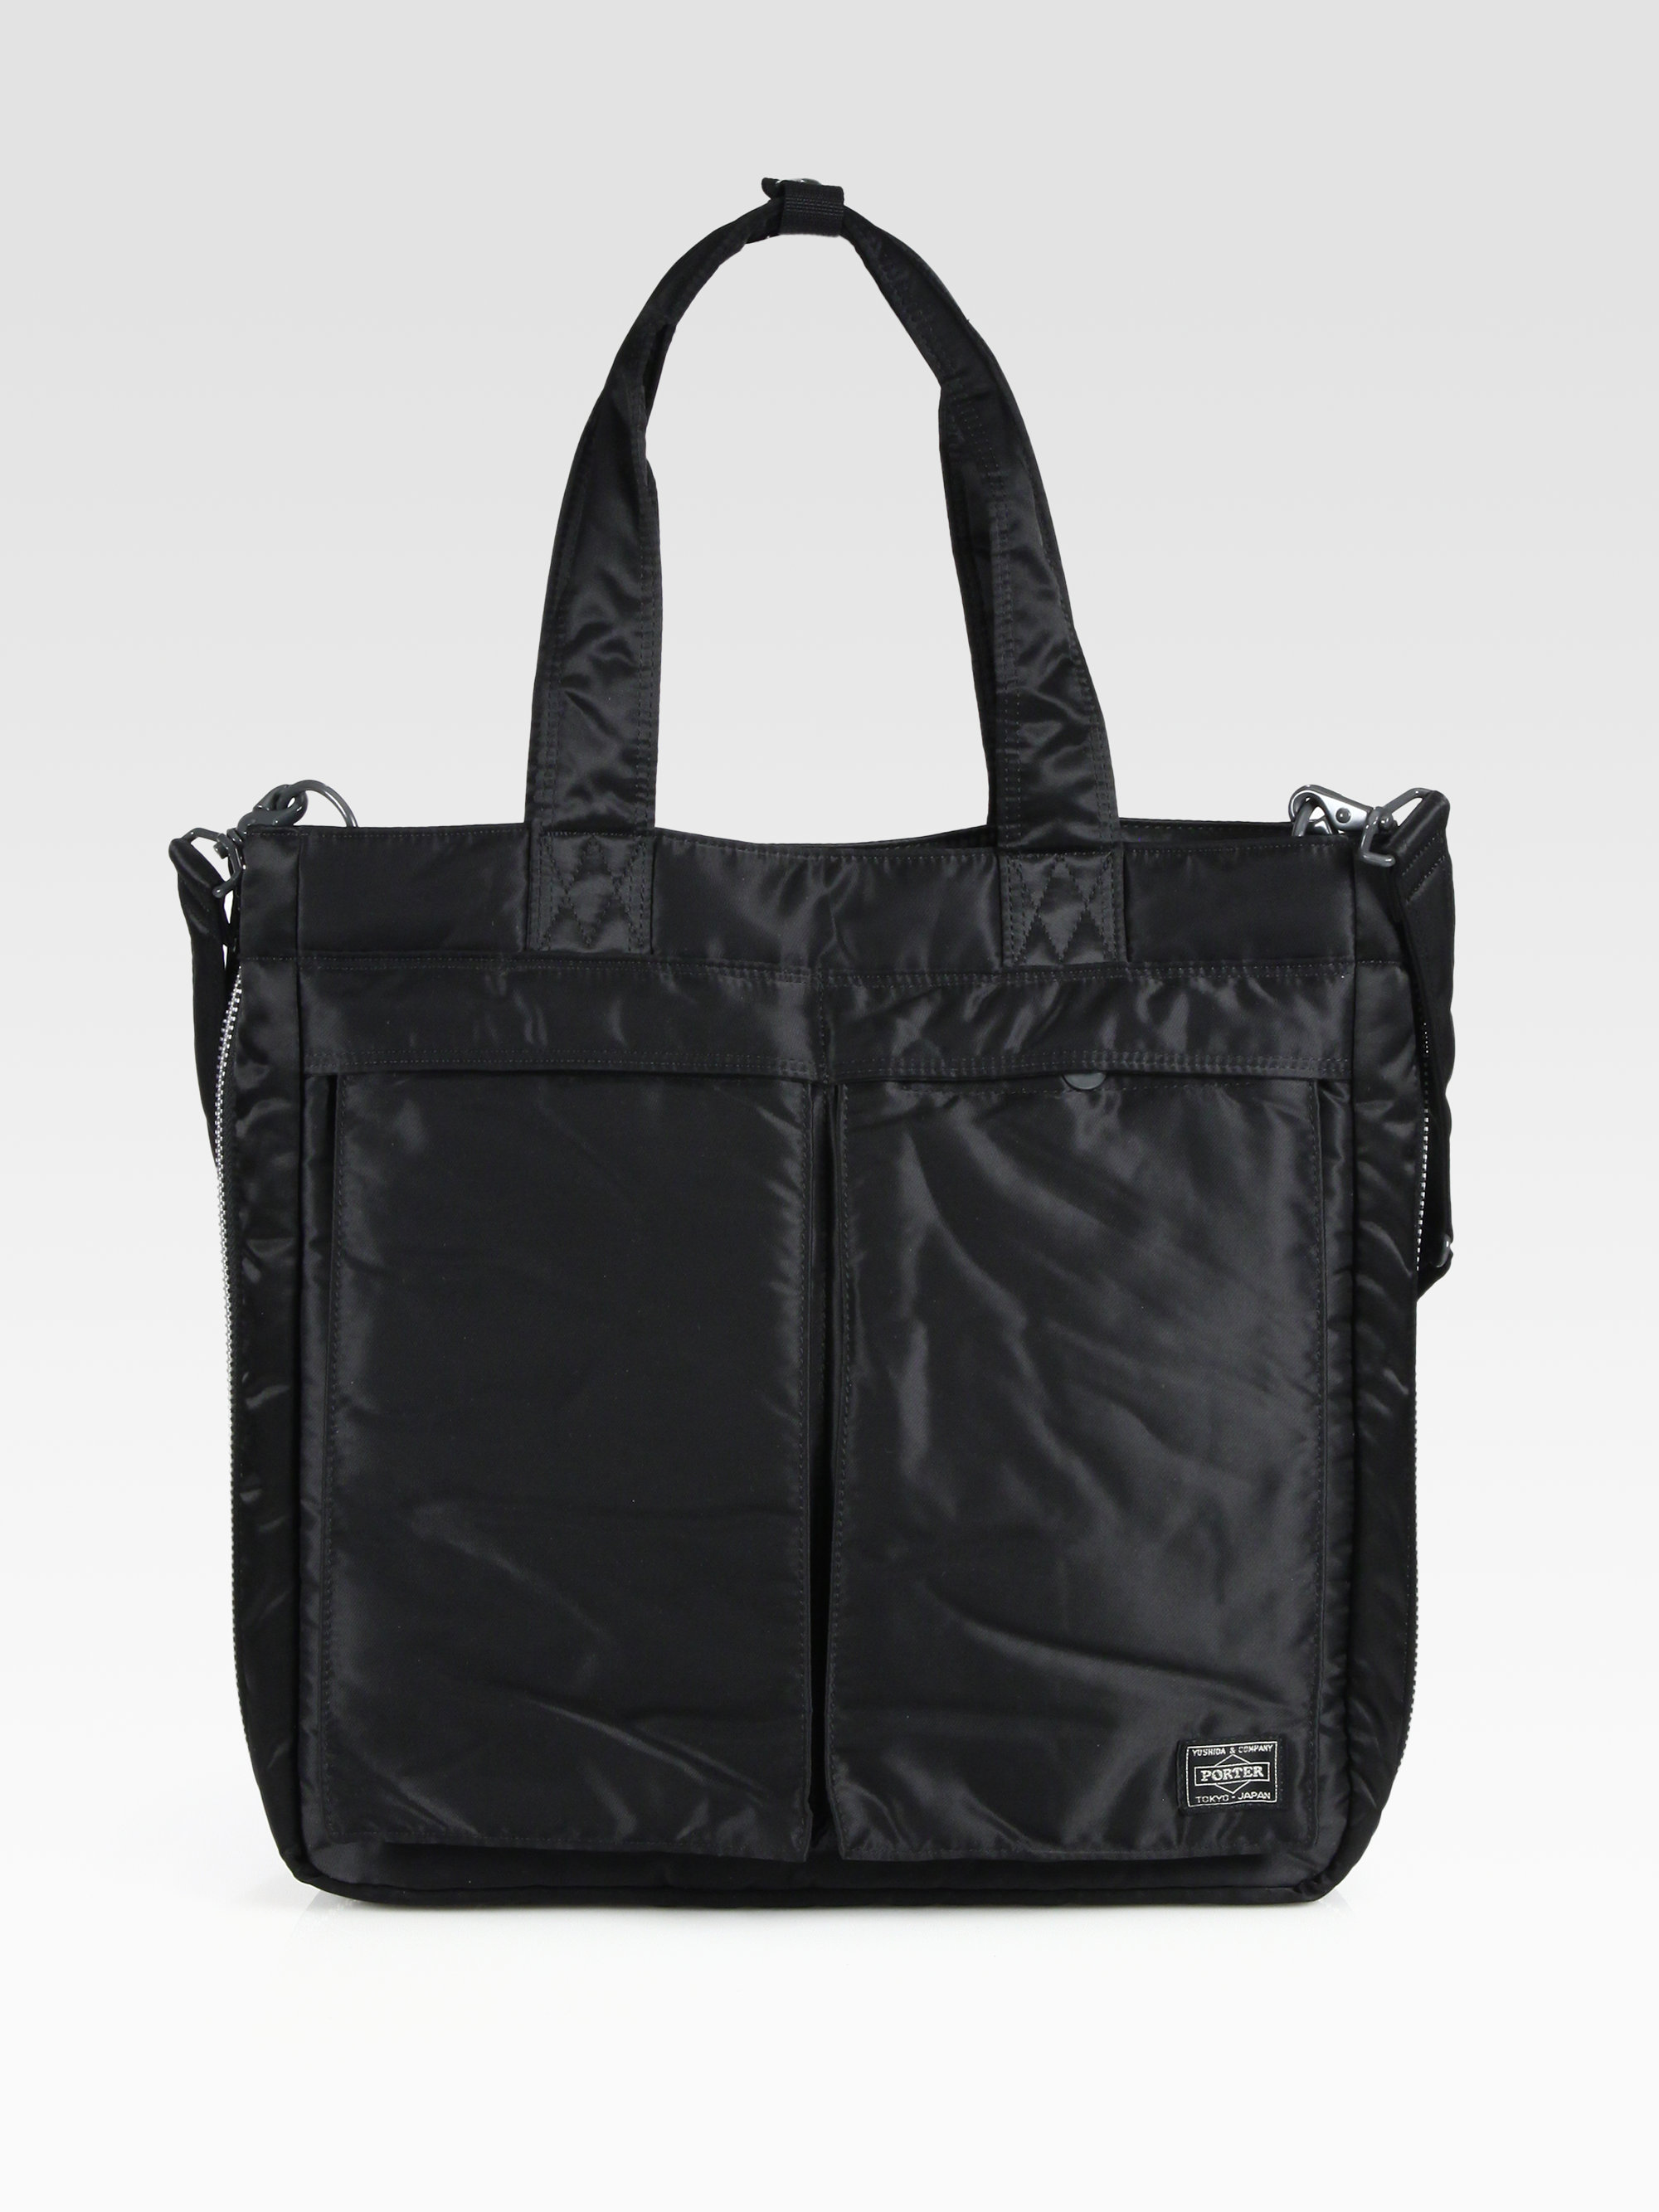 Lyst - Porter Zipped Tote Bag in Black for Men